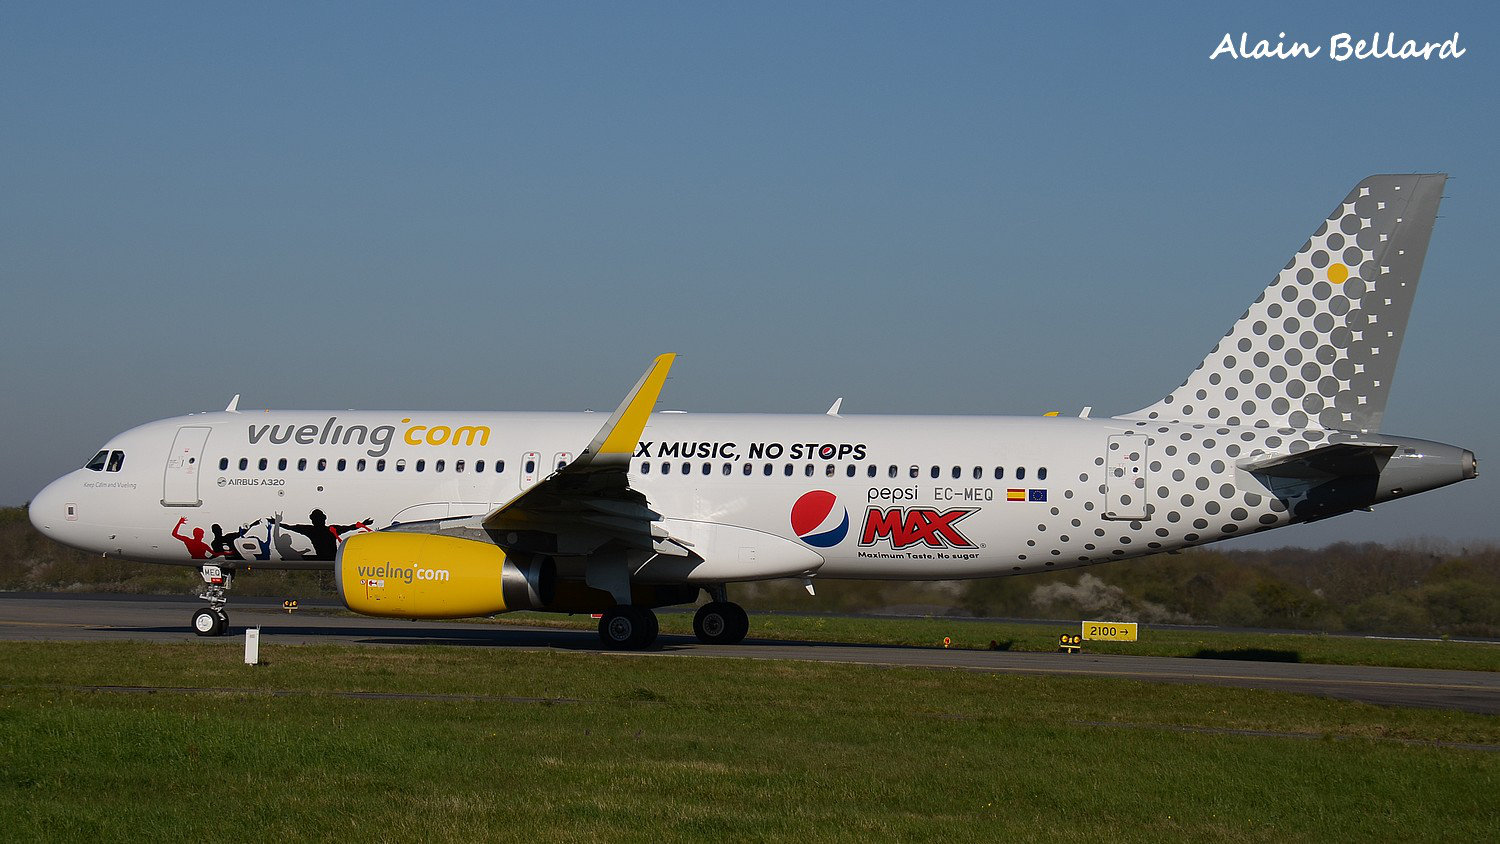 [06/04/2015] Airbus A320 (EC-MEQ) Vueling: Pepsi Max Ptpd